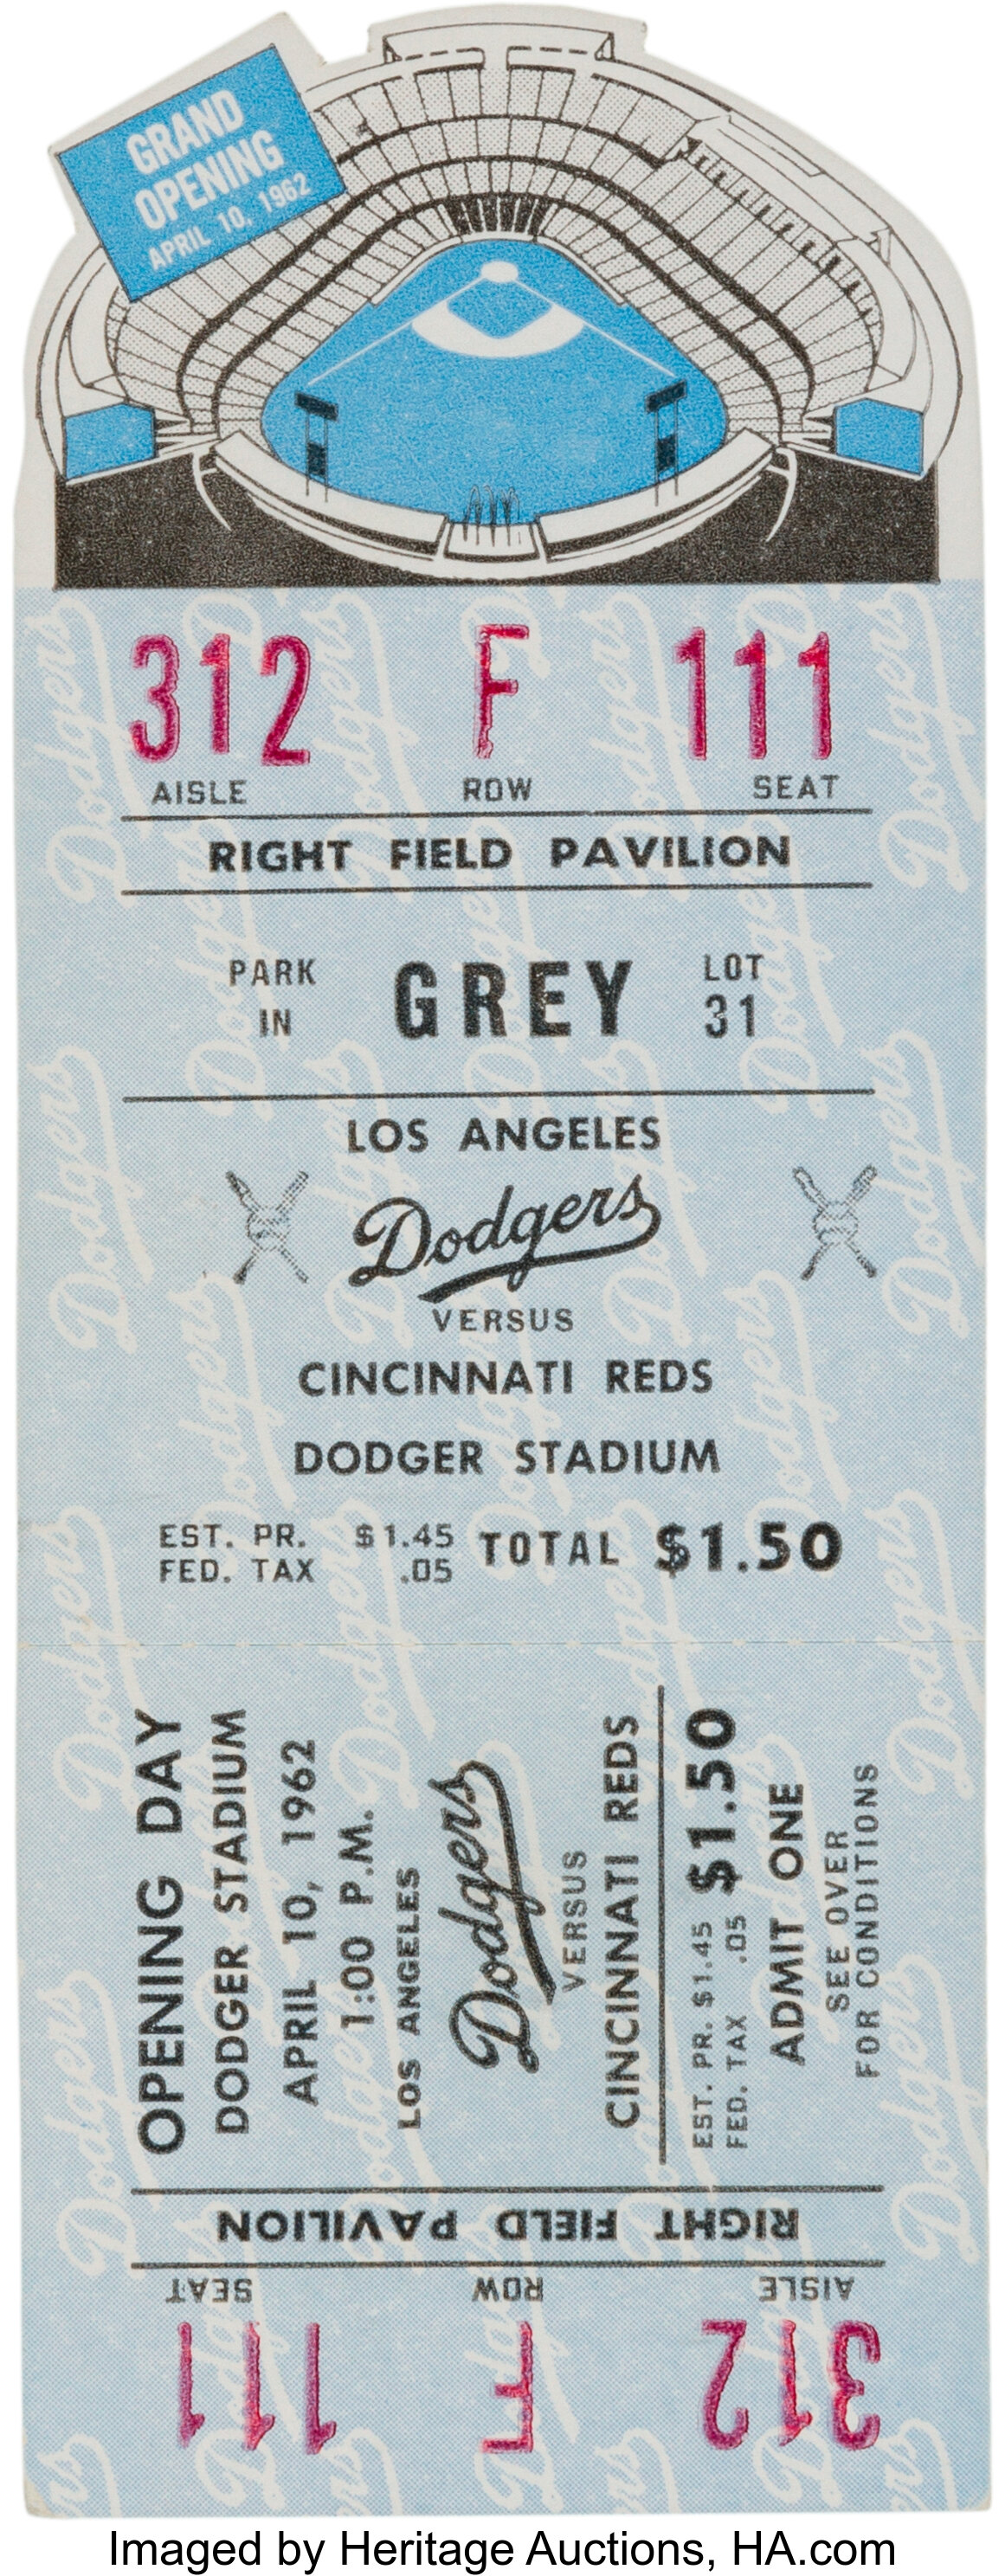 Dodgers Ticket Information